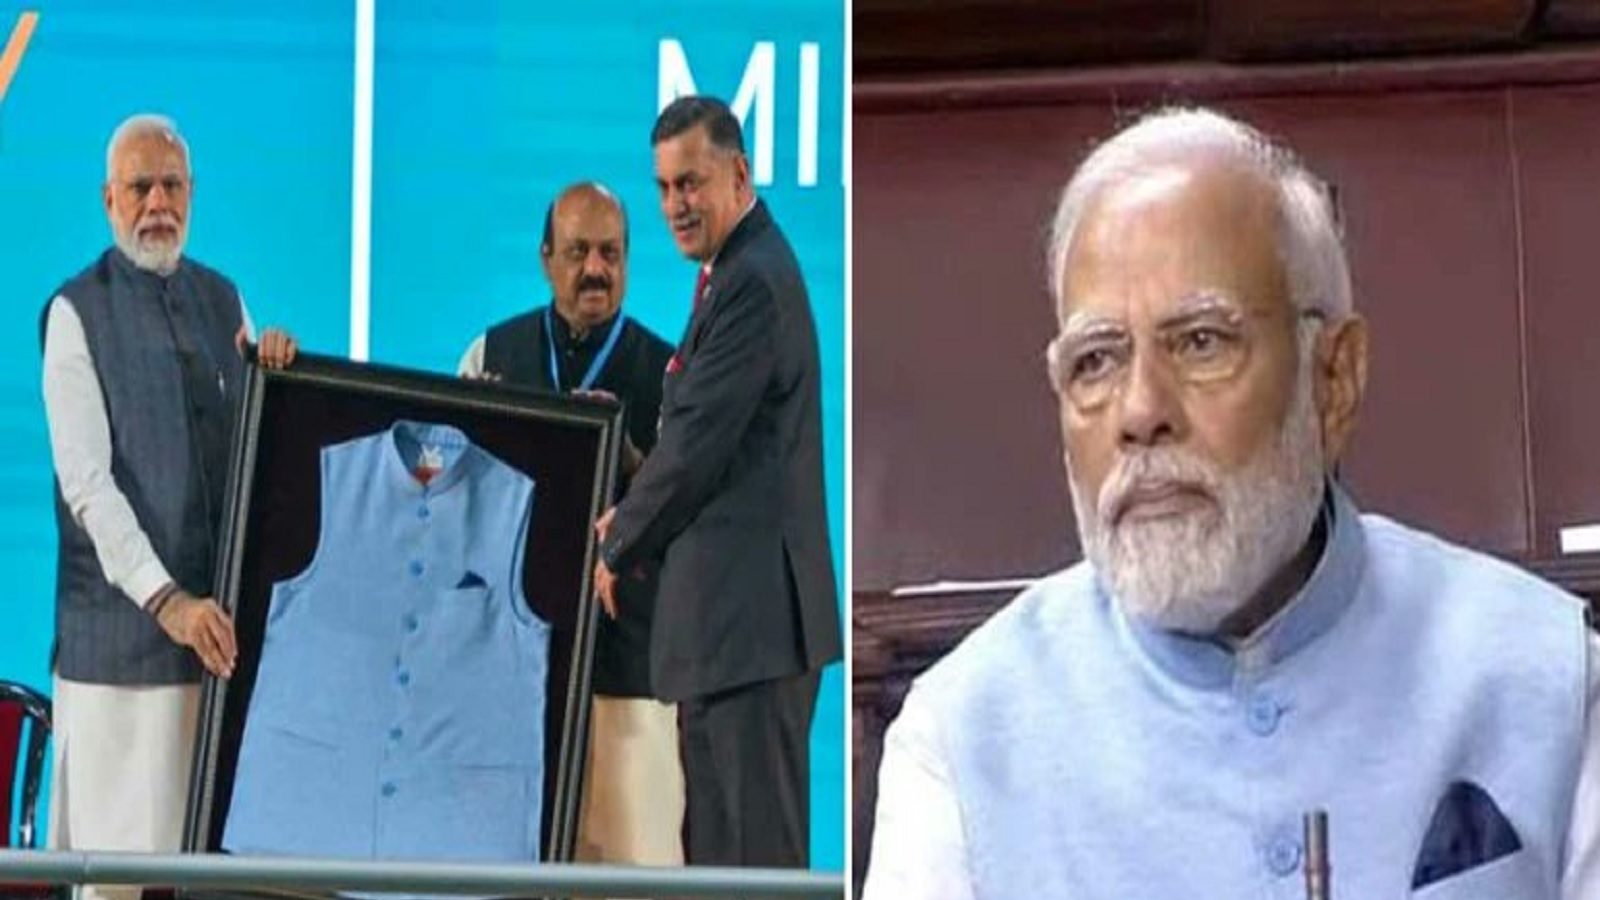 Pm Modi Wears Blue Sadri Jacket Made Of Recycled Plastic Bottles In Parliament Rah Mgb پی ایم